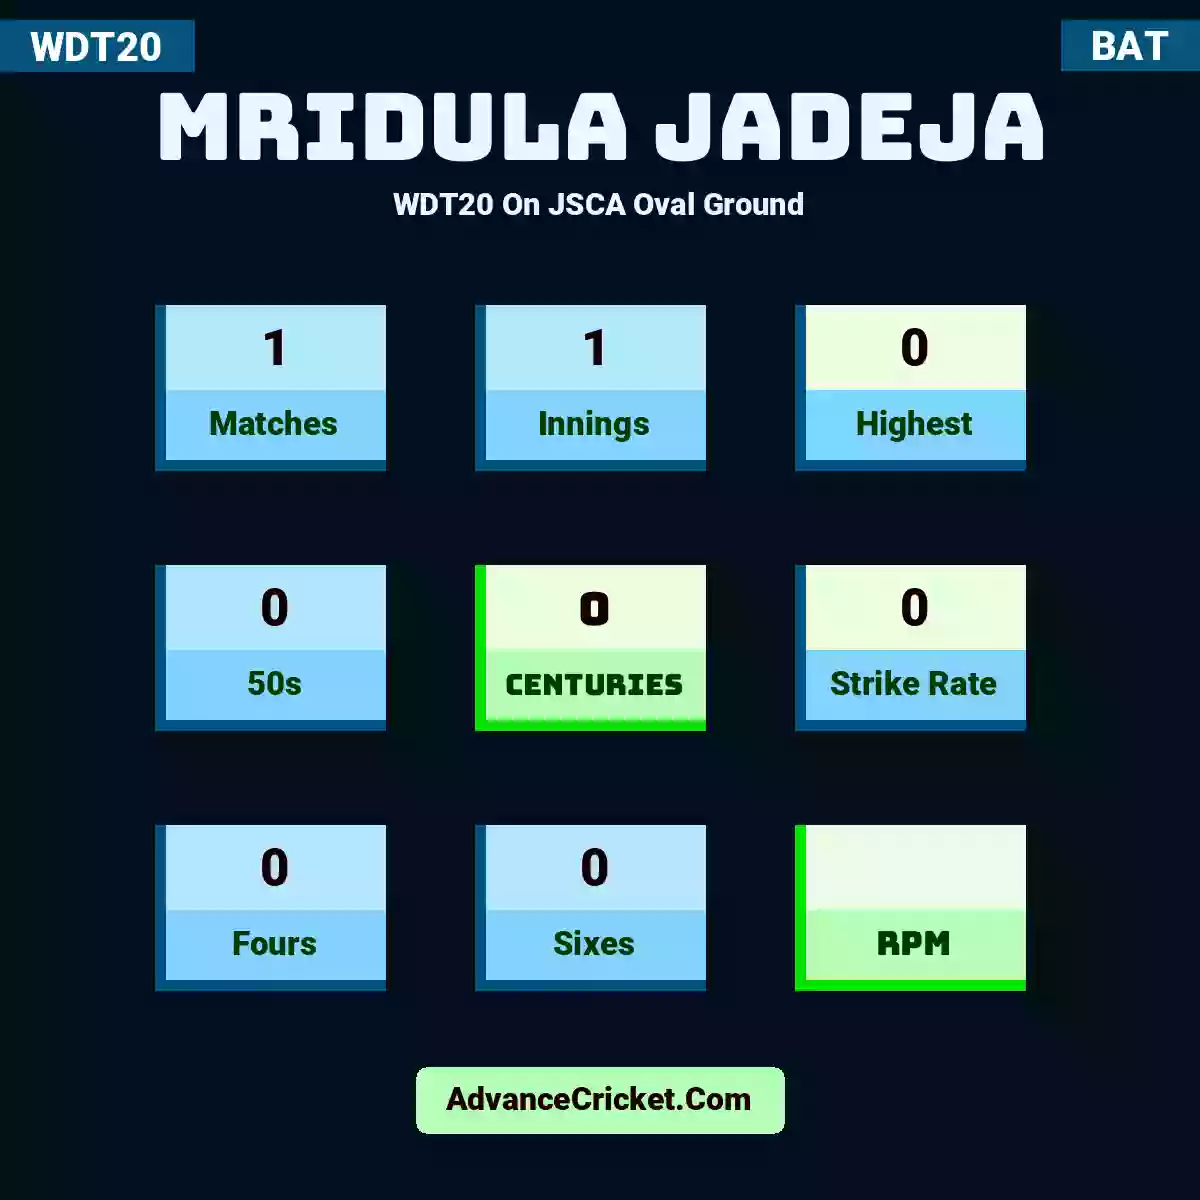 Mridula Jadeja WDT20  On JSCA Oval Ground, Mridula Jadeja played 1 matches, scored 0 runs as highest, 0 half-centuries, and 0 centuries, with a strike rate of 0. M.Jadeja hit 0 fours and 0 sixes.